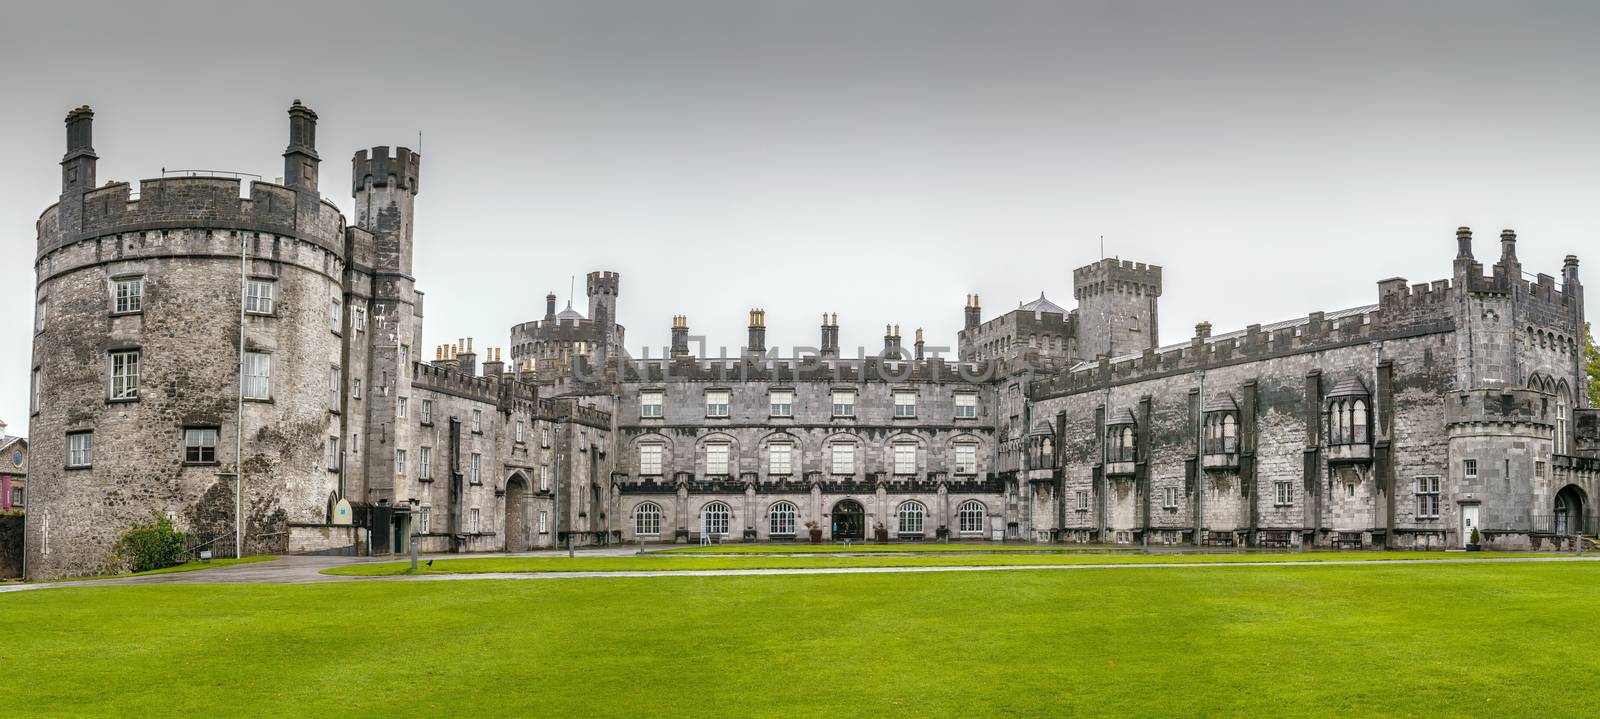 Kilkenny Castle, Ireland by borisb17